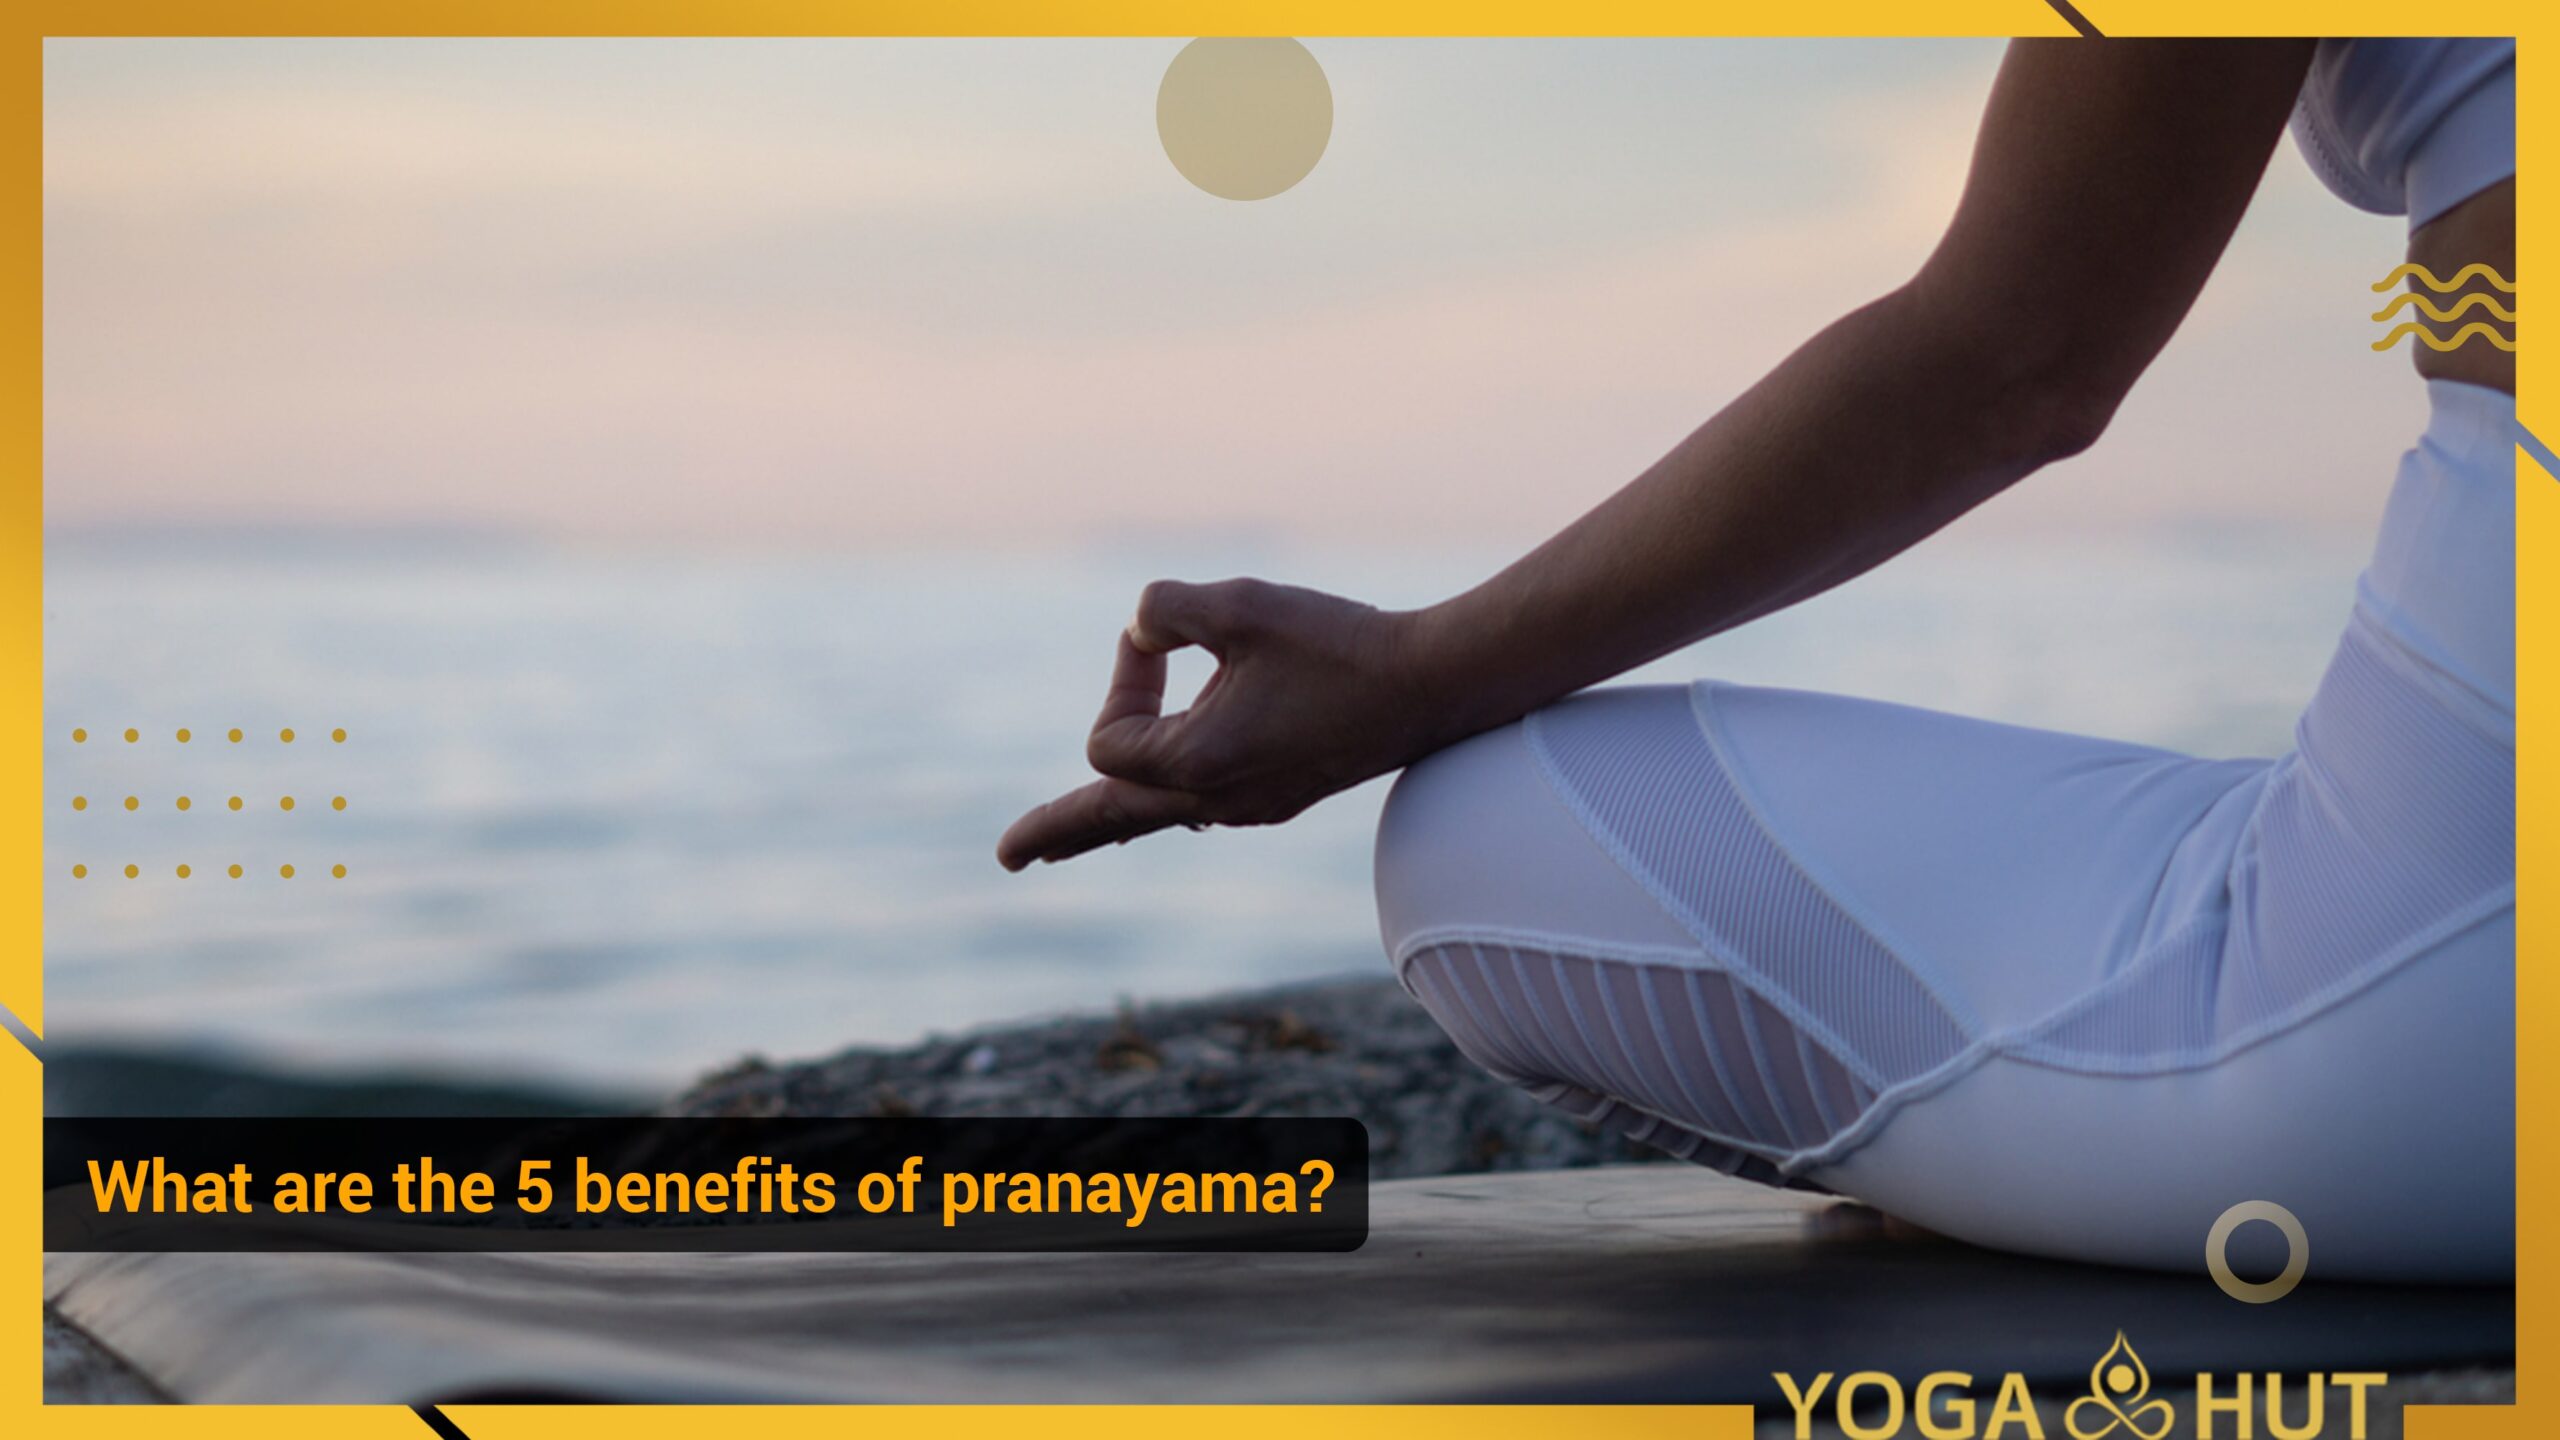 Benefits of pranayama